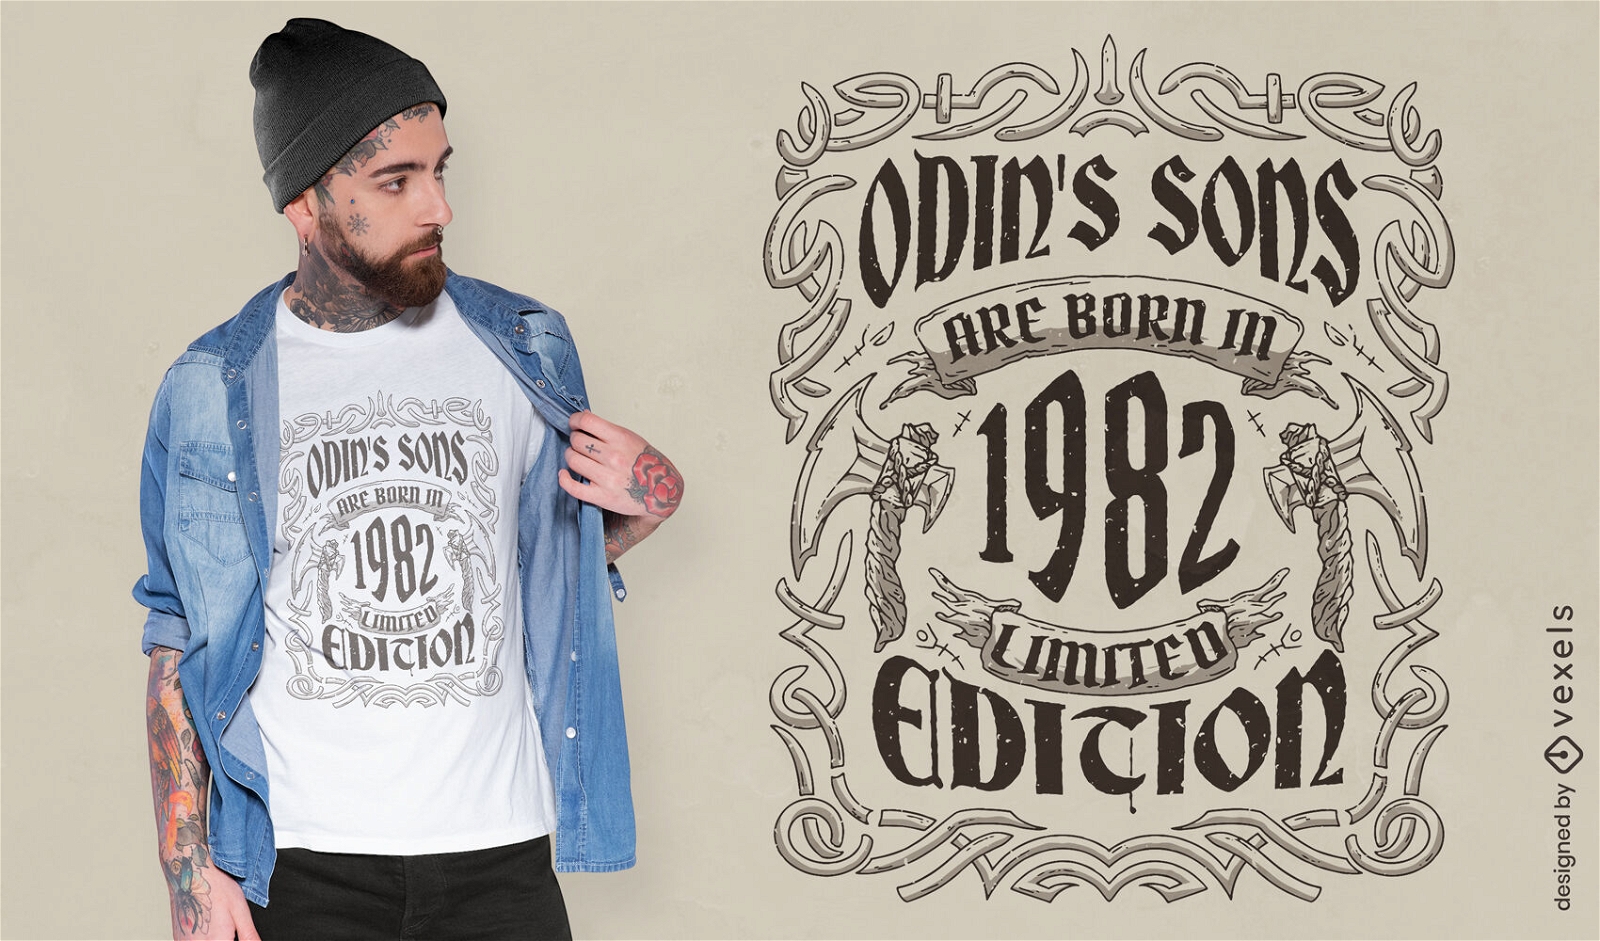 Odin's sons birthday vintage t-shirt design